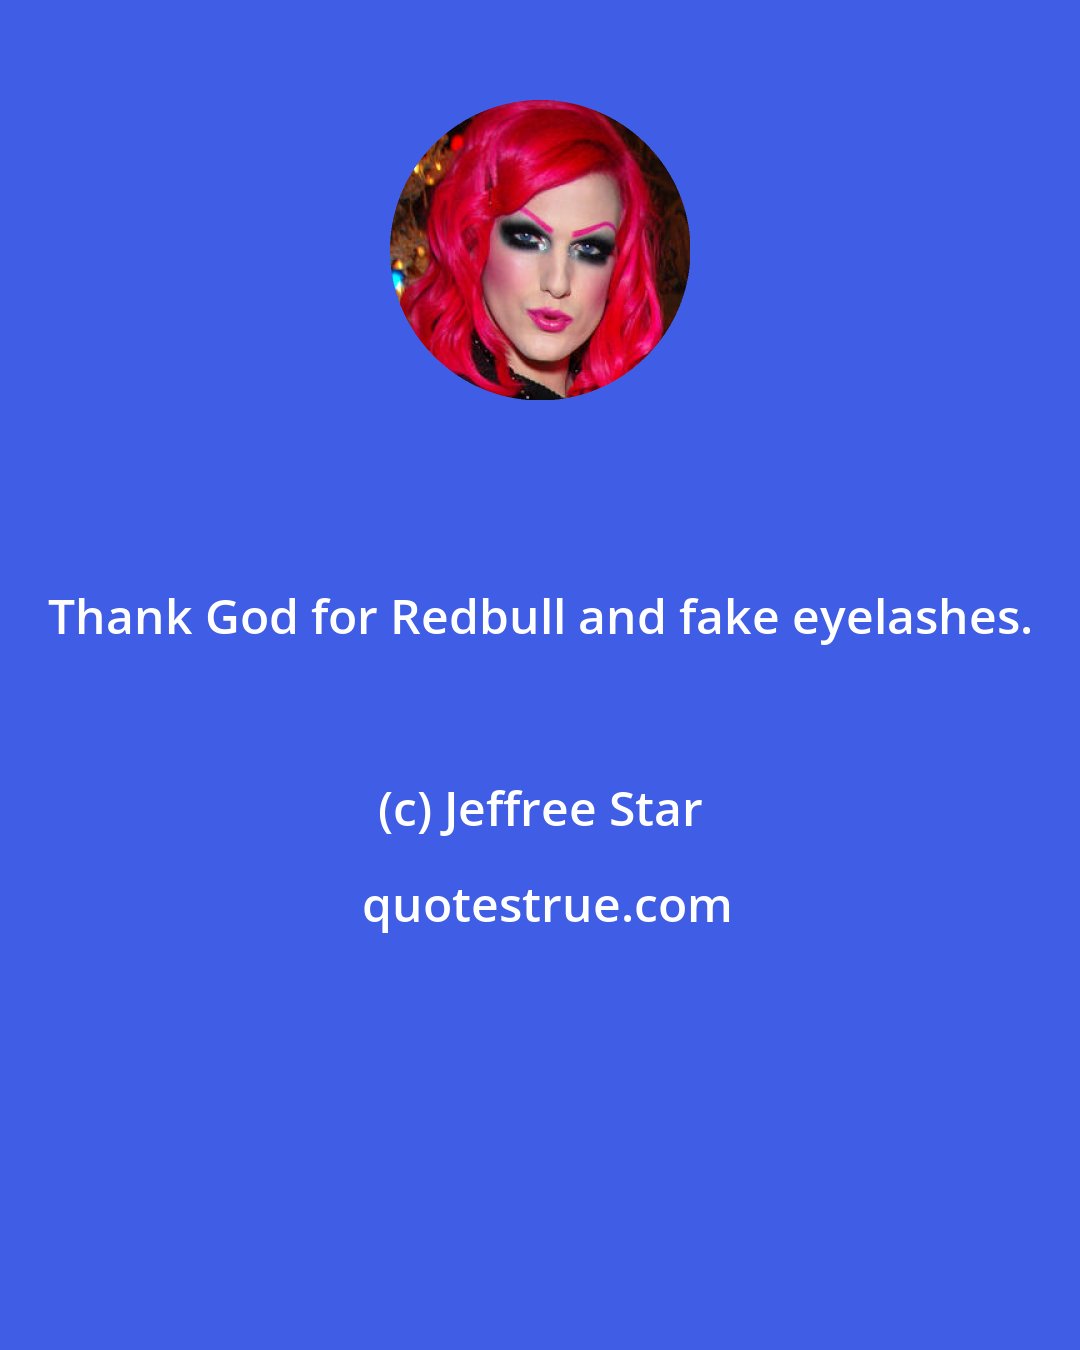 Jeffree Star: Thank God for Redbull and fake eyelashes.